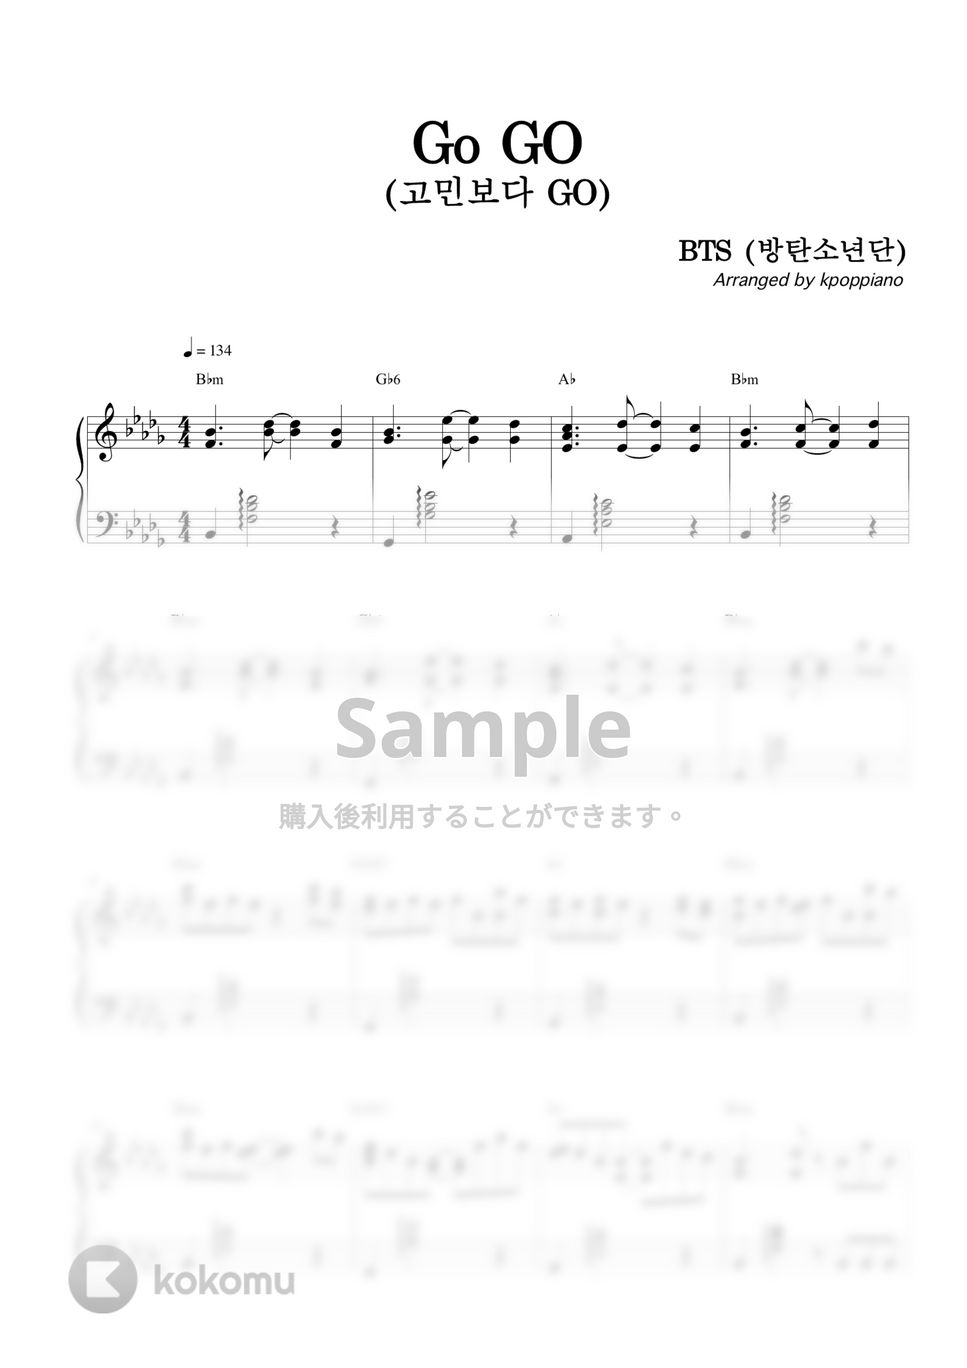 防弾少年団 (BTS) - Go Go by KPOP PIANO